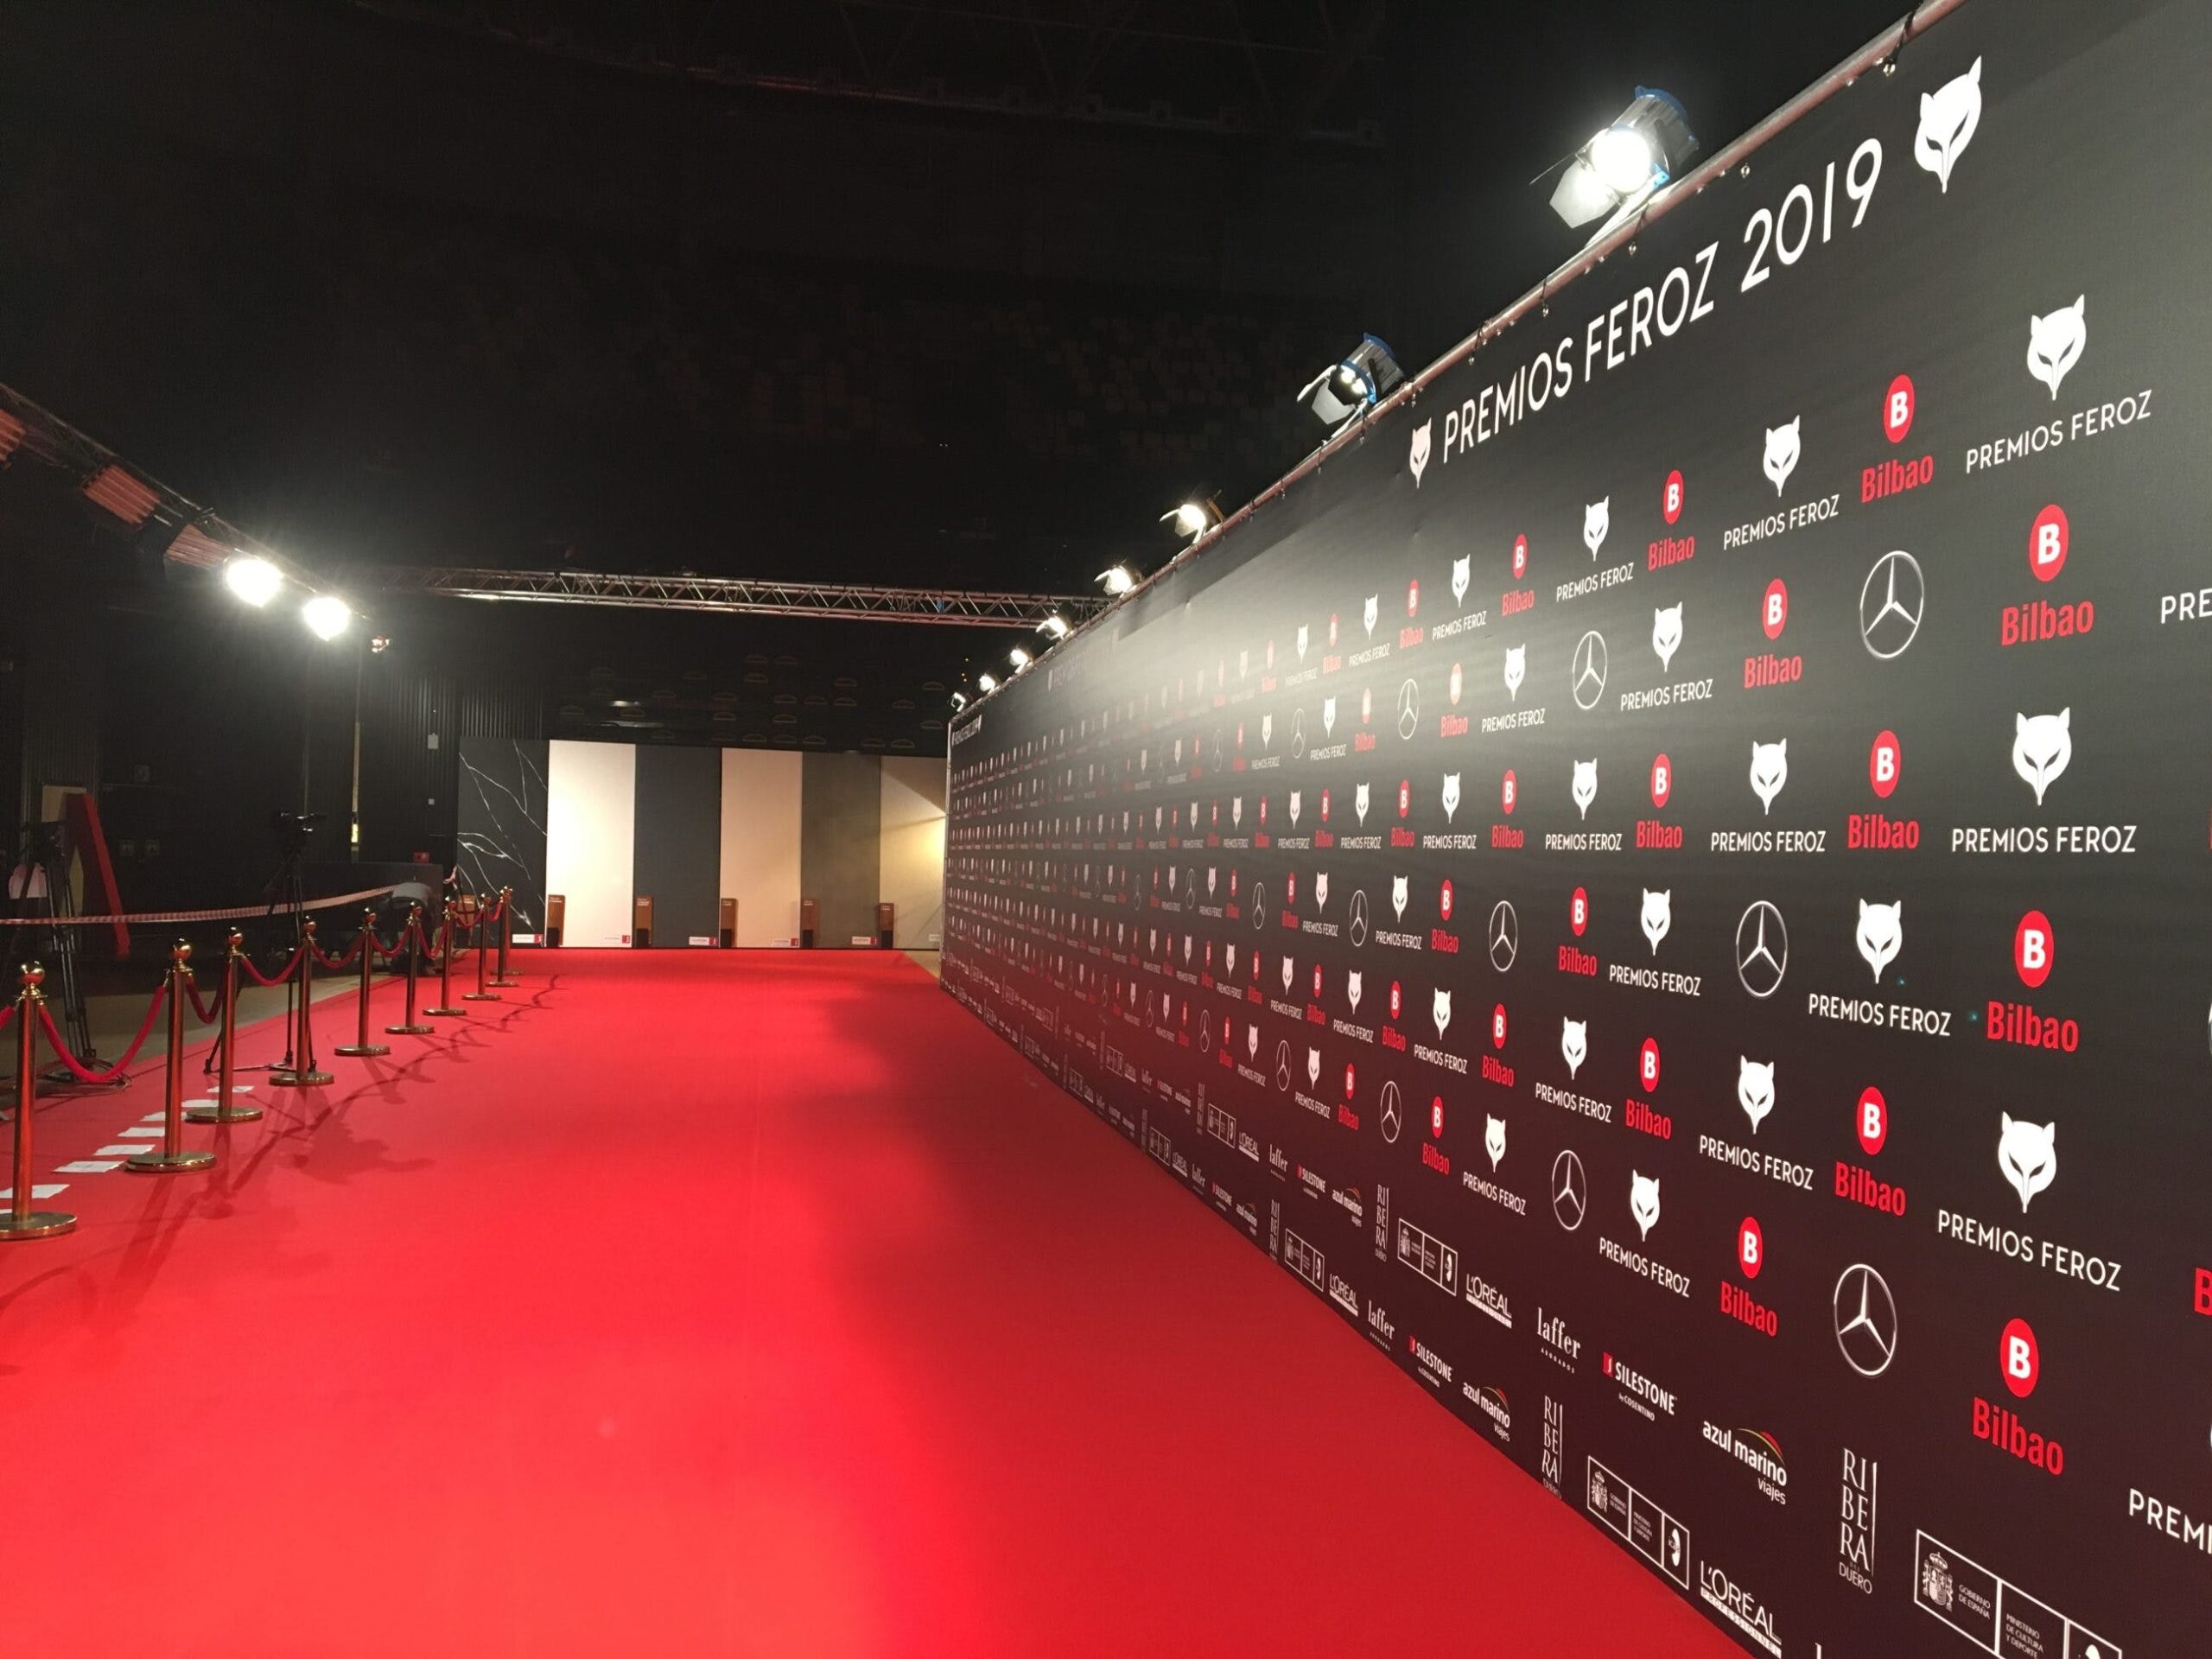 Image 35 of Alfombra roja Premios Feroz 2019 Tablas Silestone 1 scaled in Silestone® and 2019 Feroz Awards - Cosentino